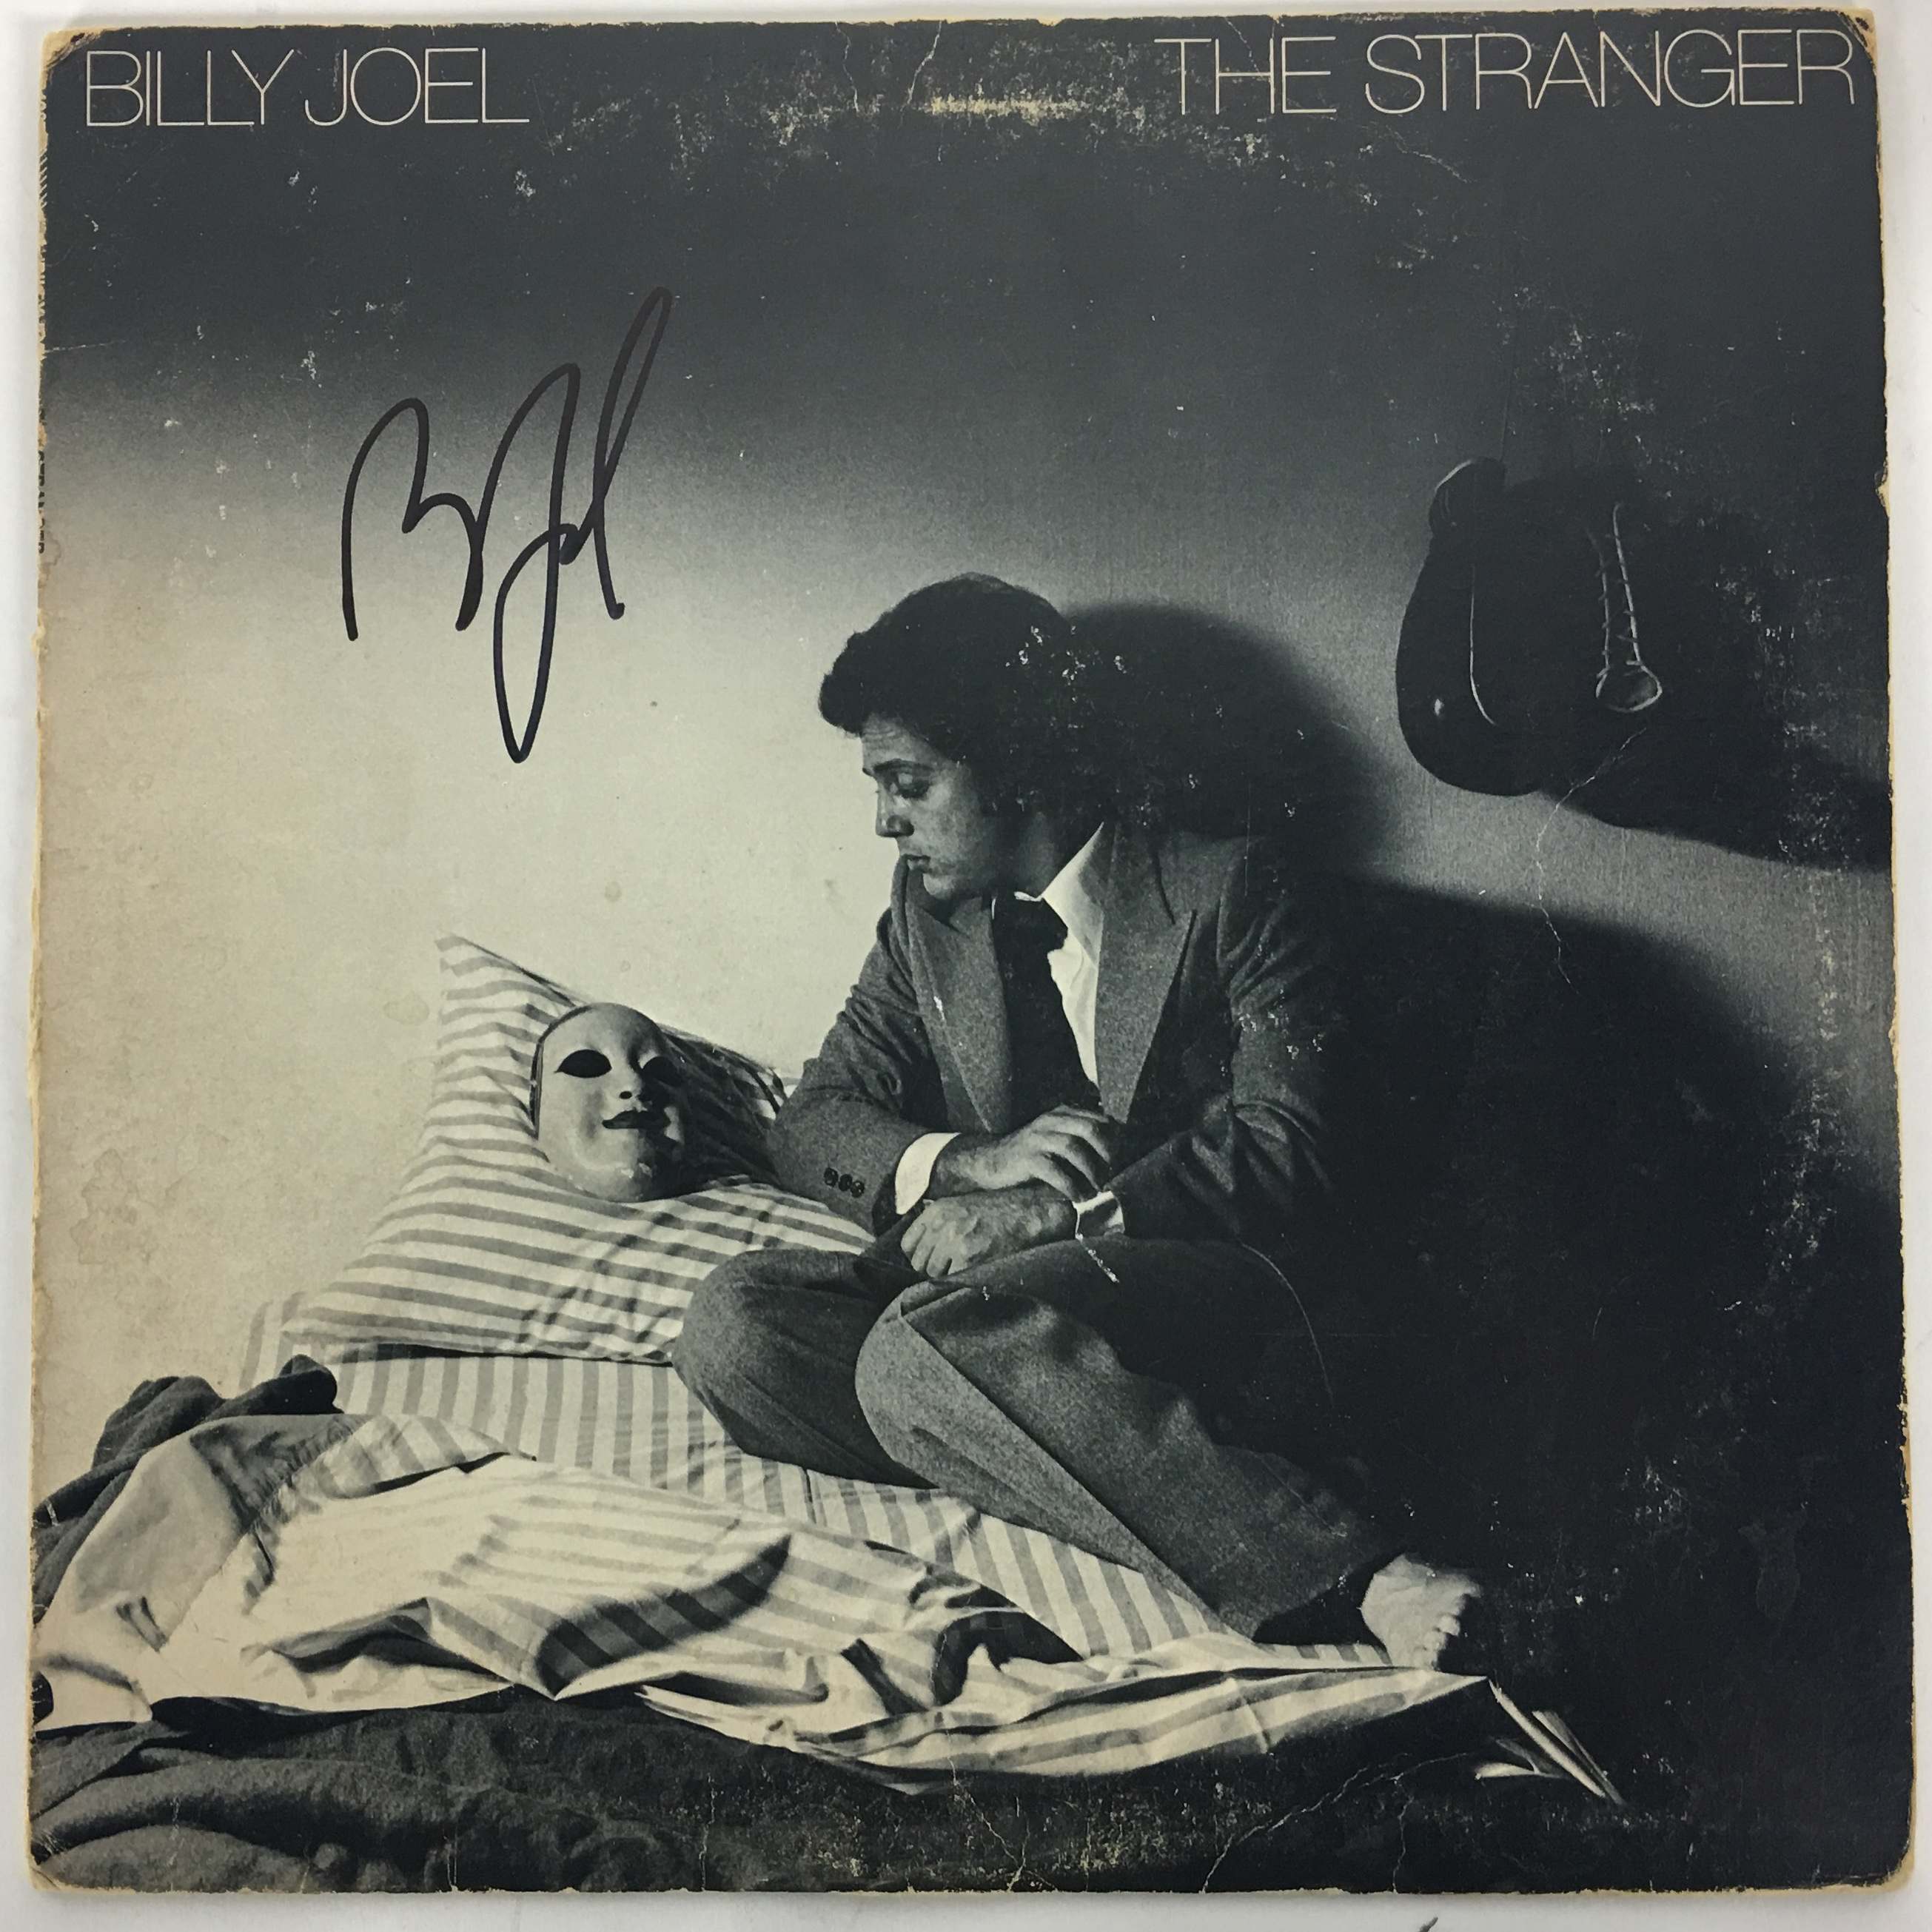 Billy Joel Signed "The Stranger" Album (Beckett/BAS Guaranteed) .